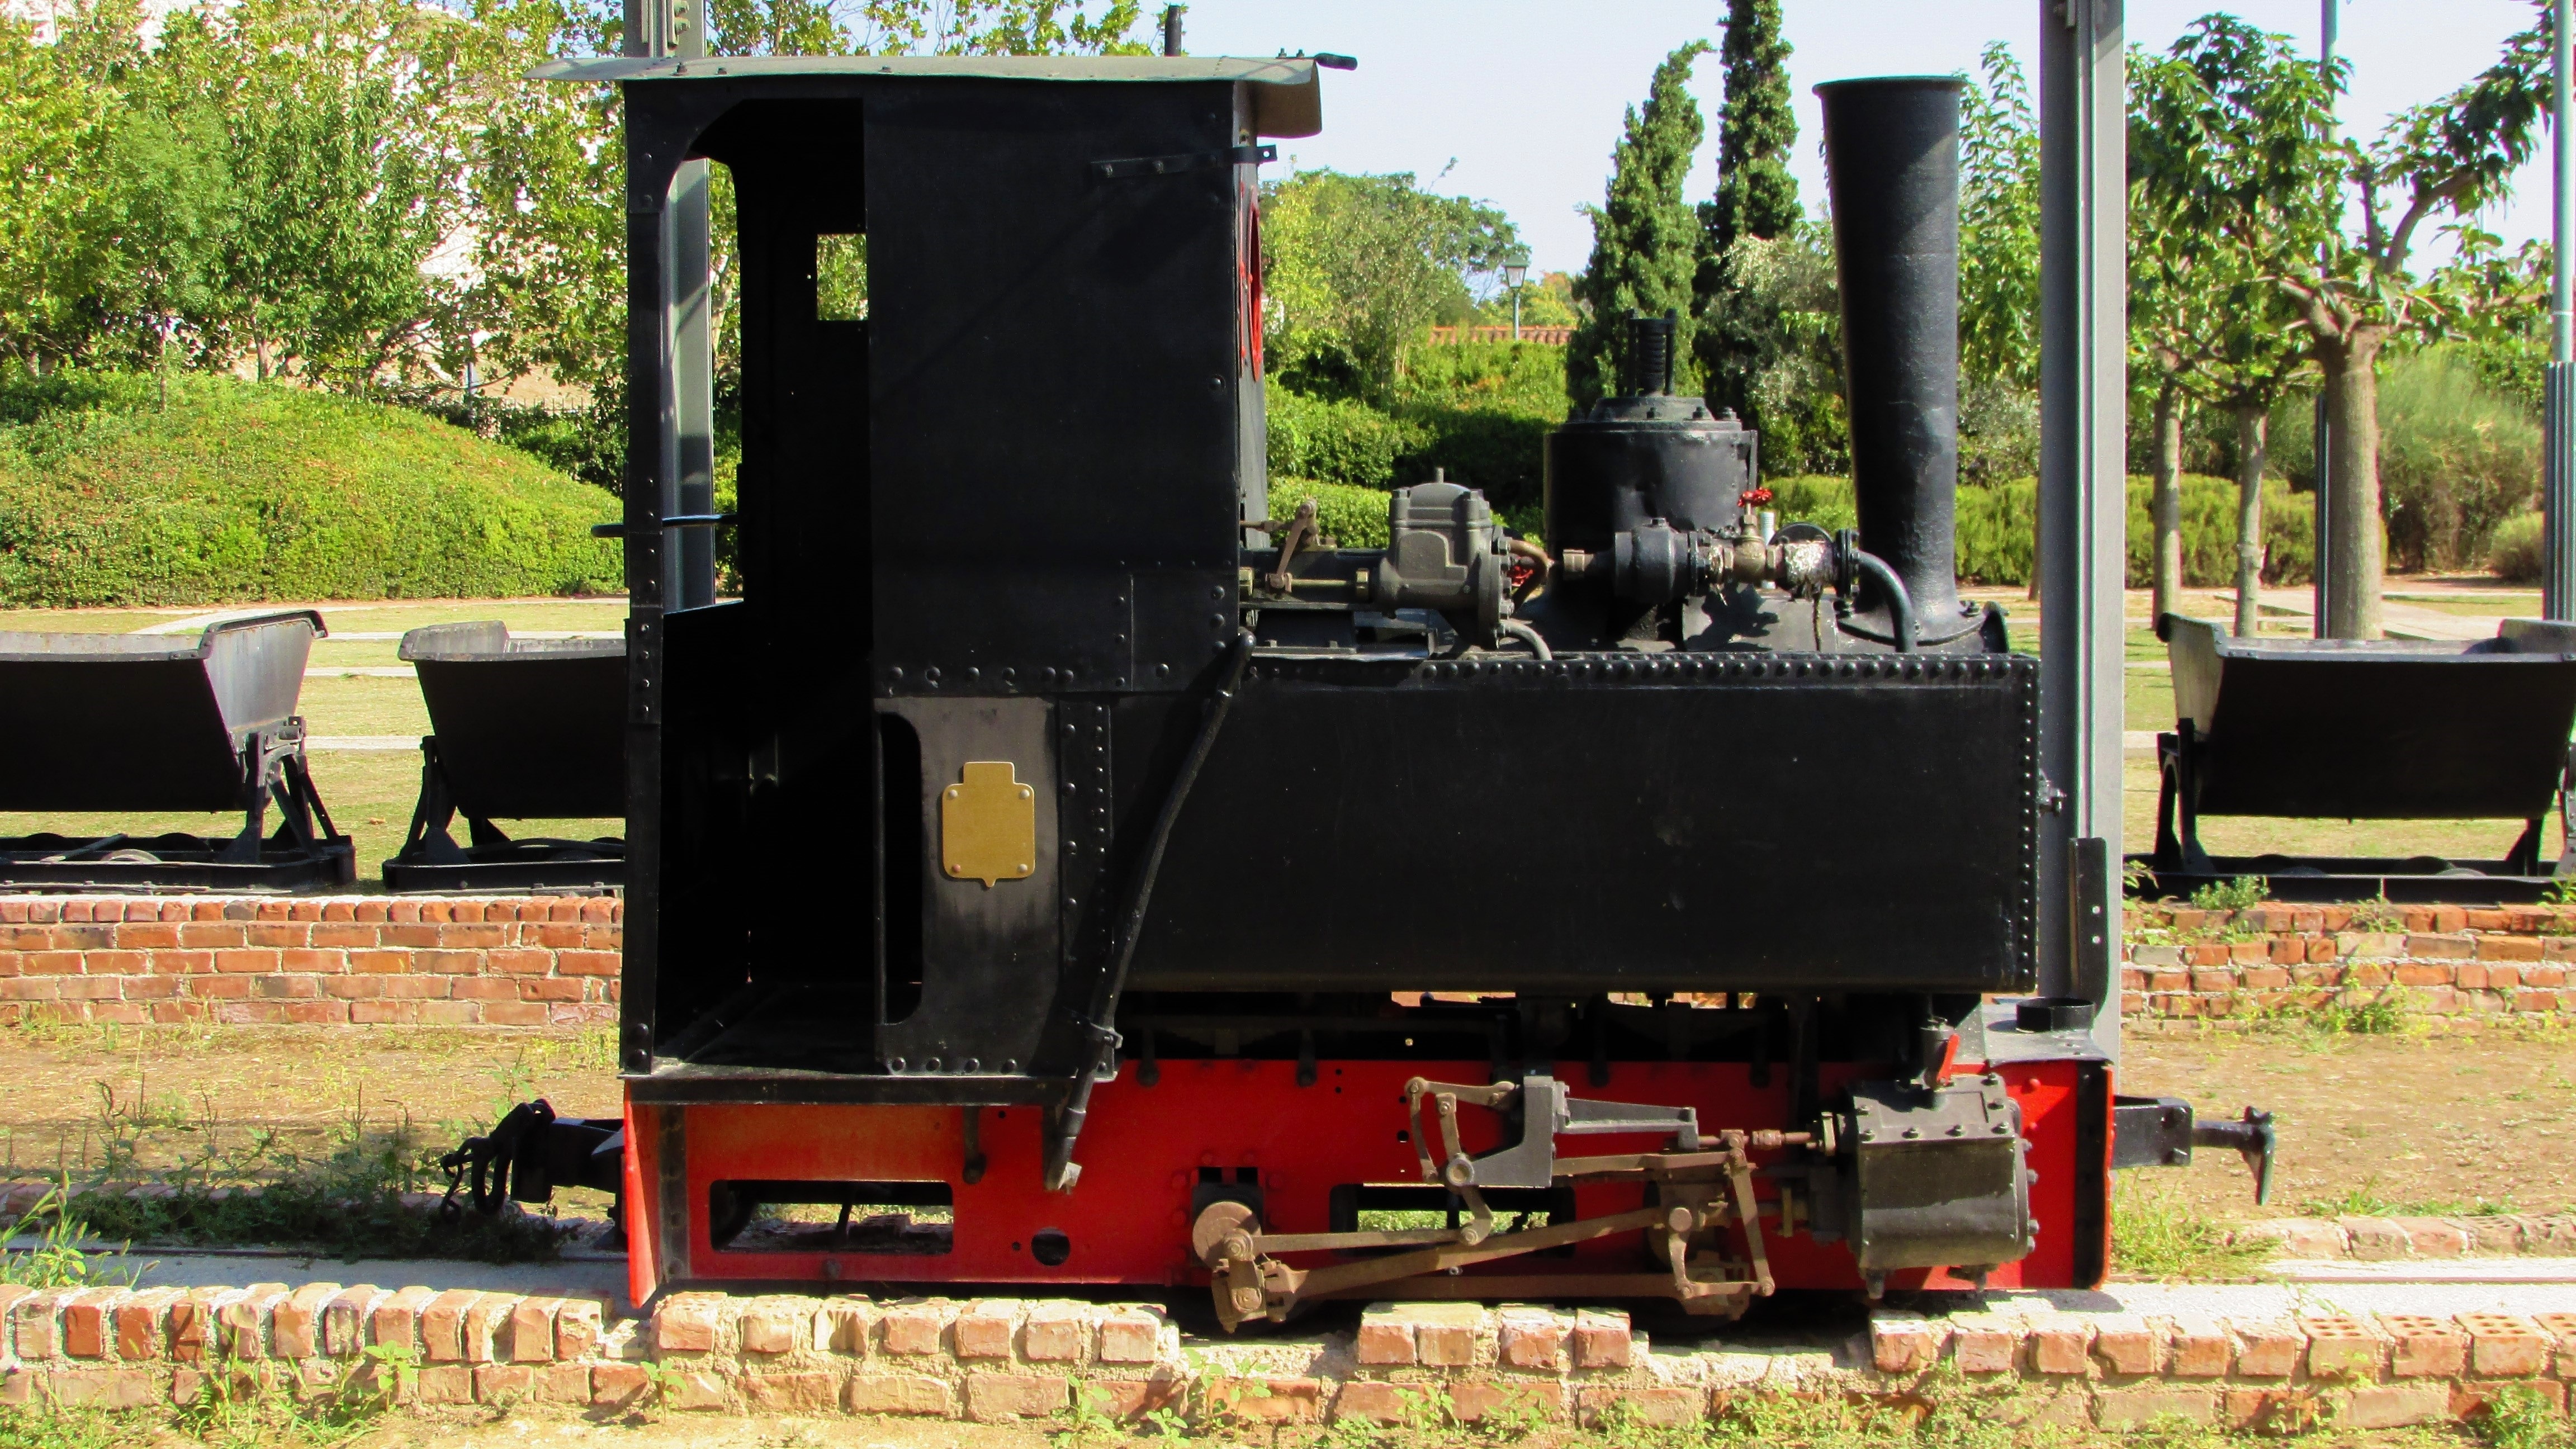 black and grey steam engine